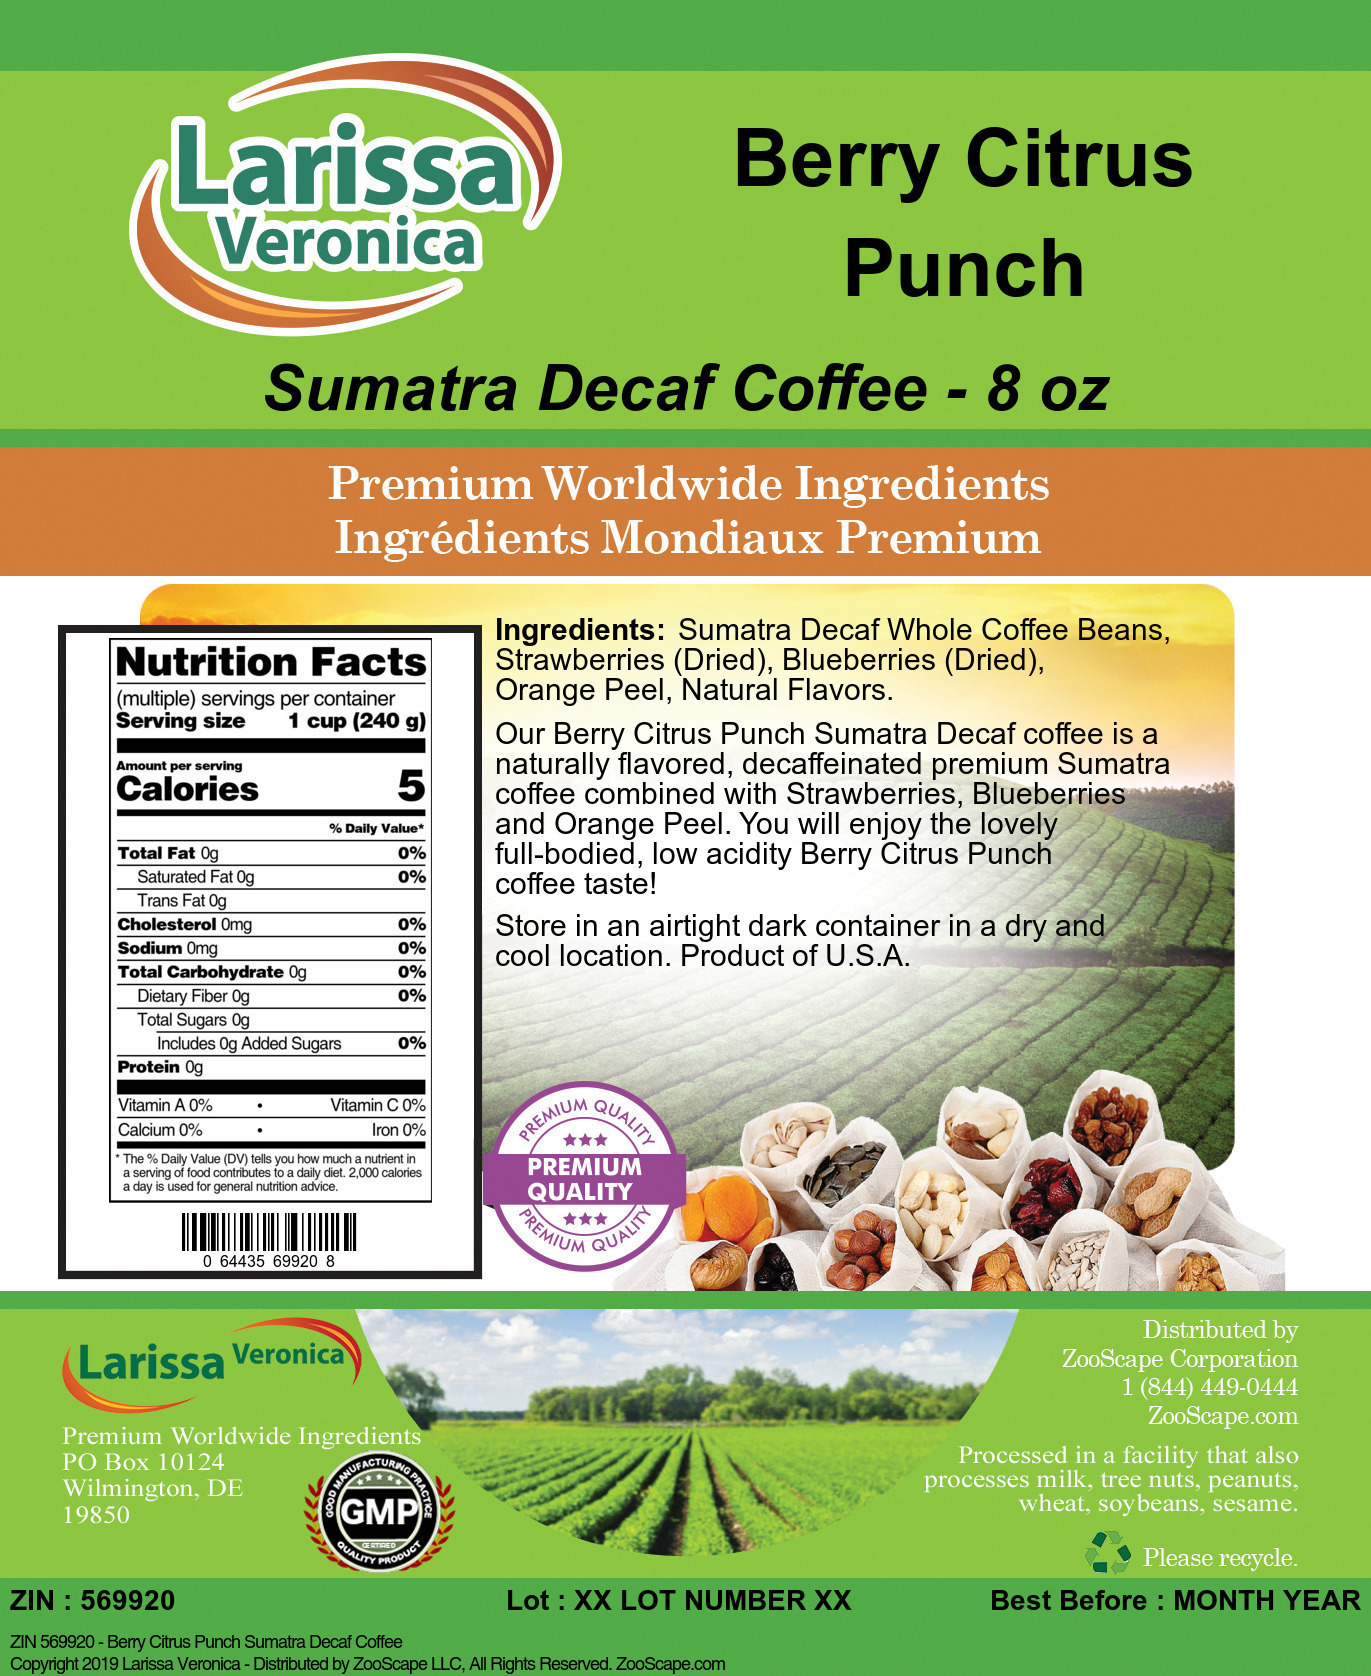 Berry Citrus Punch Sumatra Decaf Coffee - Label